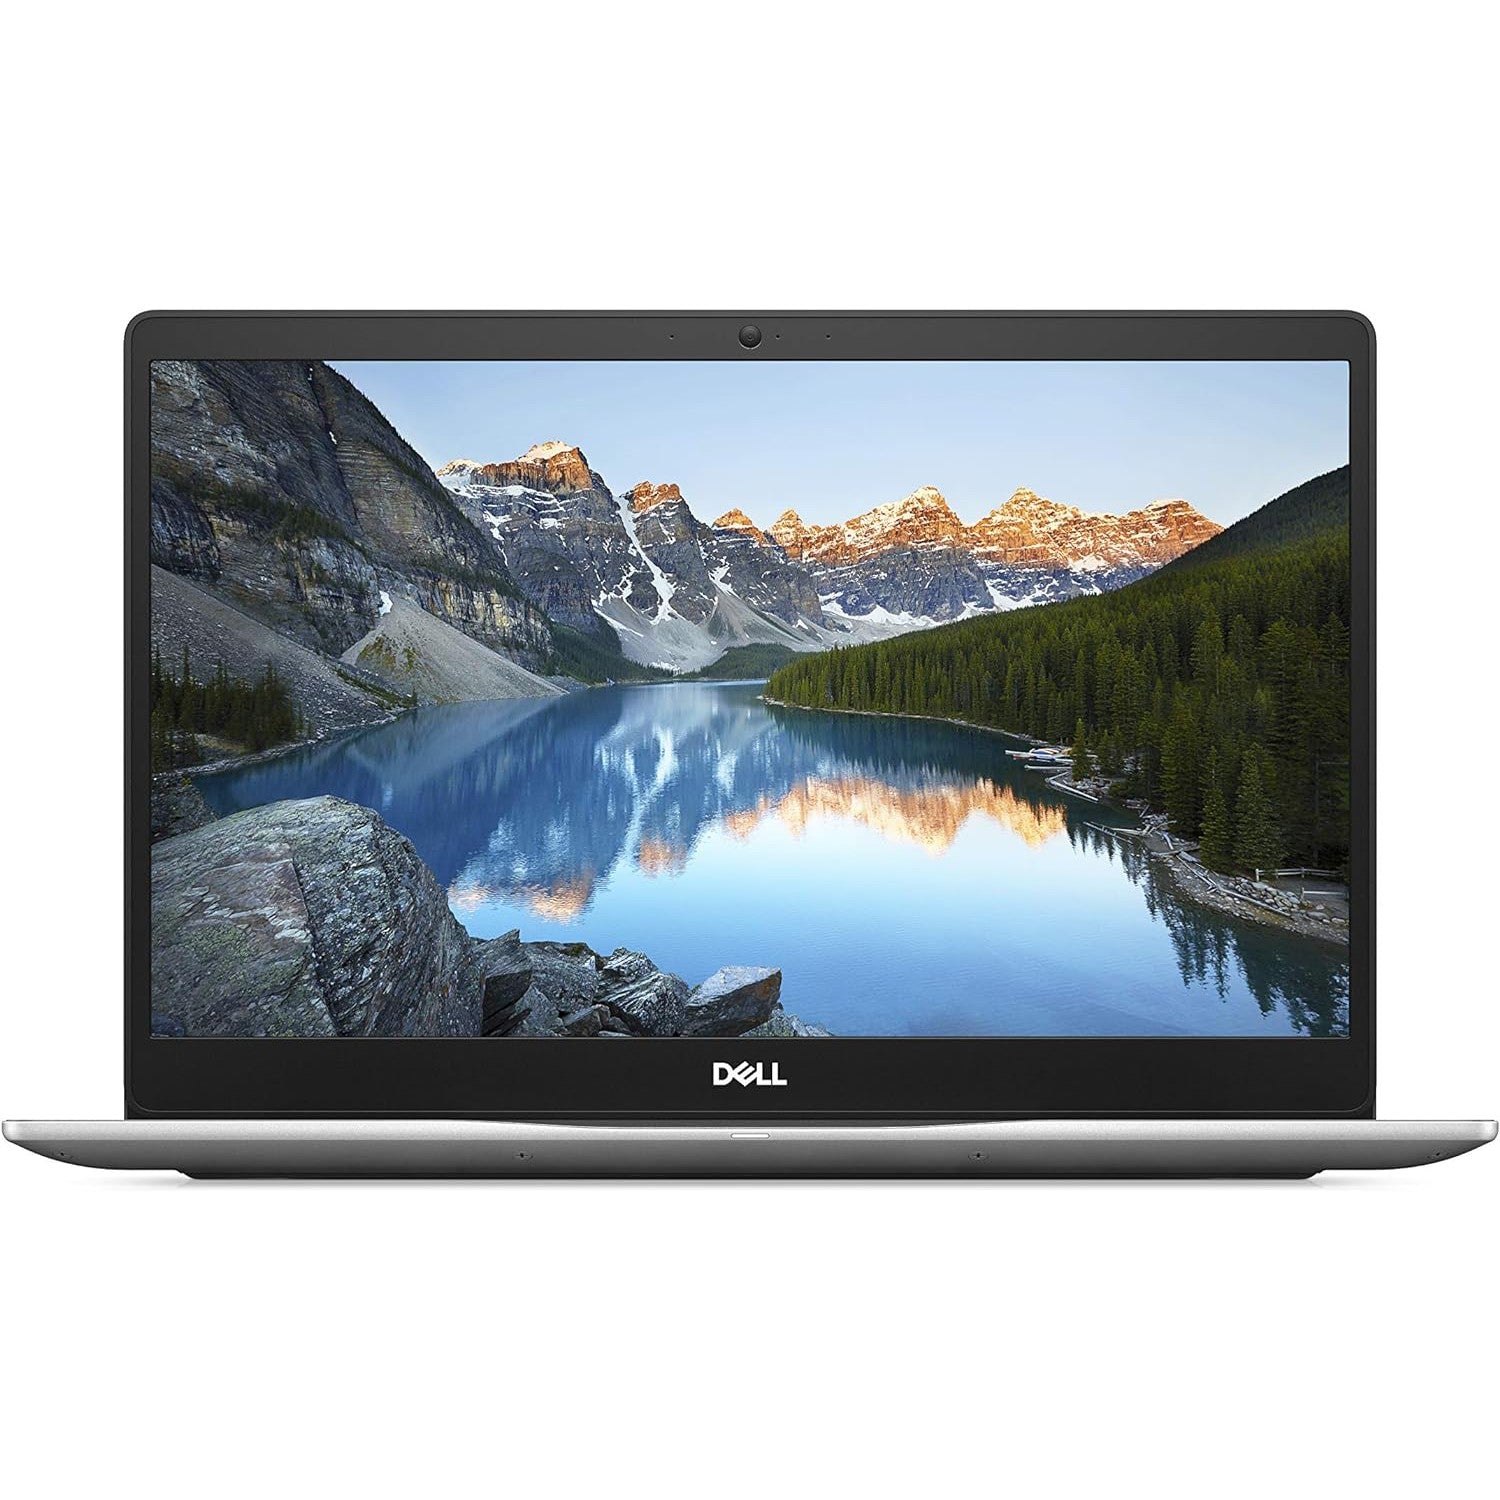 Dell Inspiron 17 5767 Laptop Intel Core i7 16GB 2TB HDD 17.3